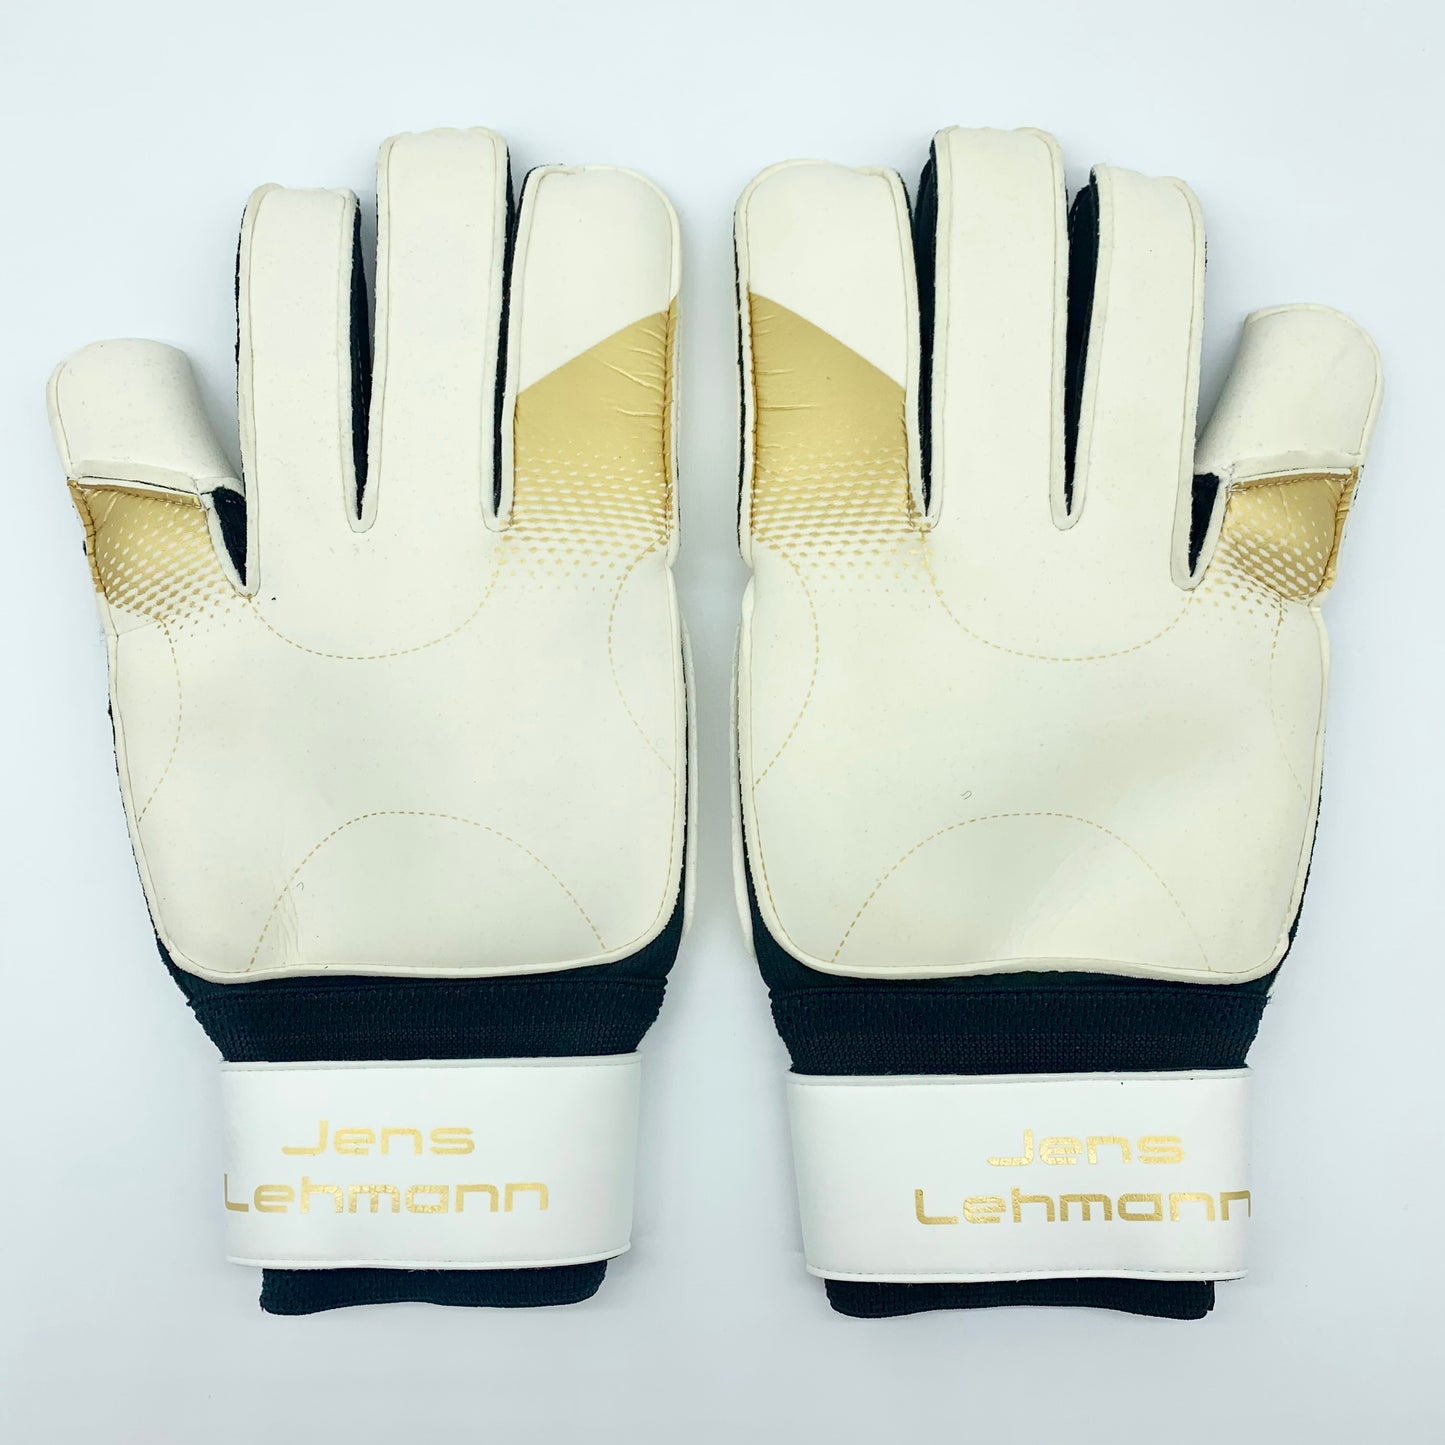 Jens Lehmann Match Issued Nike Vapor Grip 3 SMU Goalkeeper Gloves